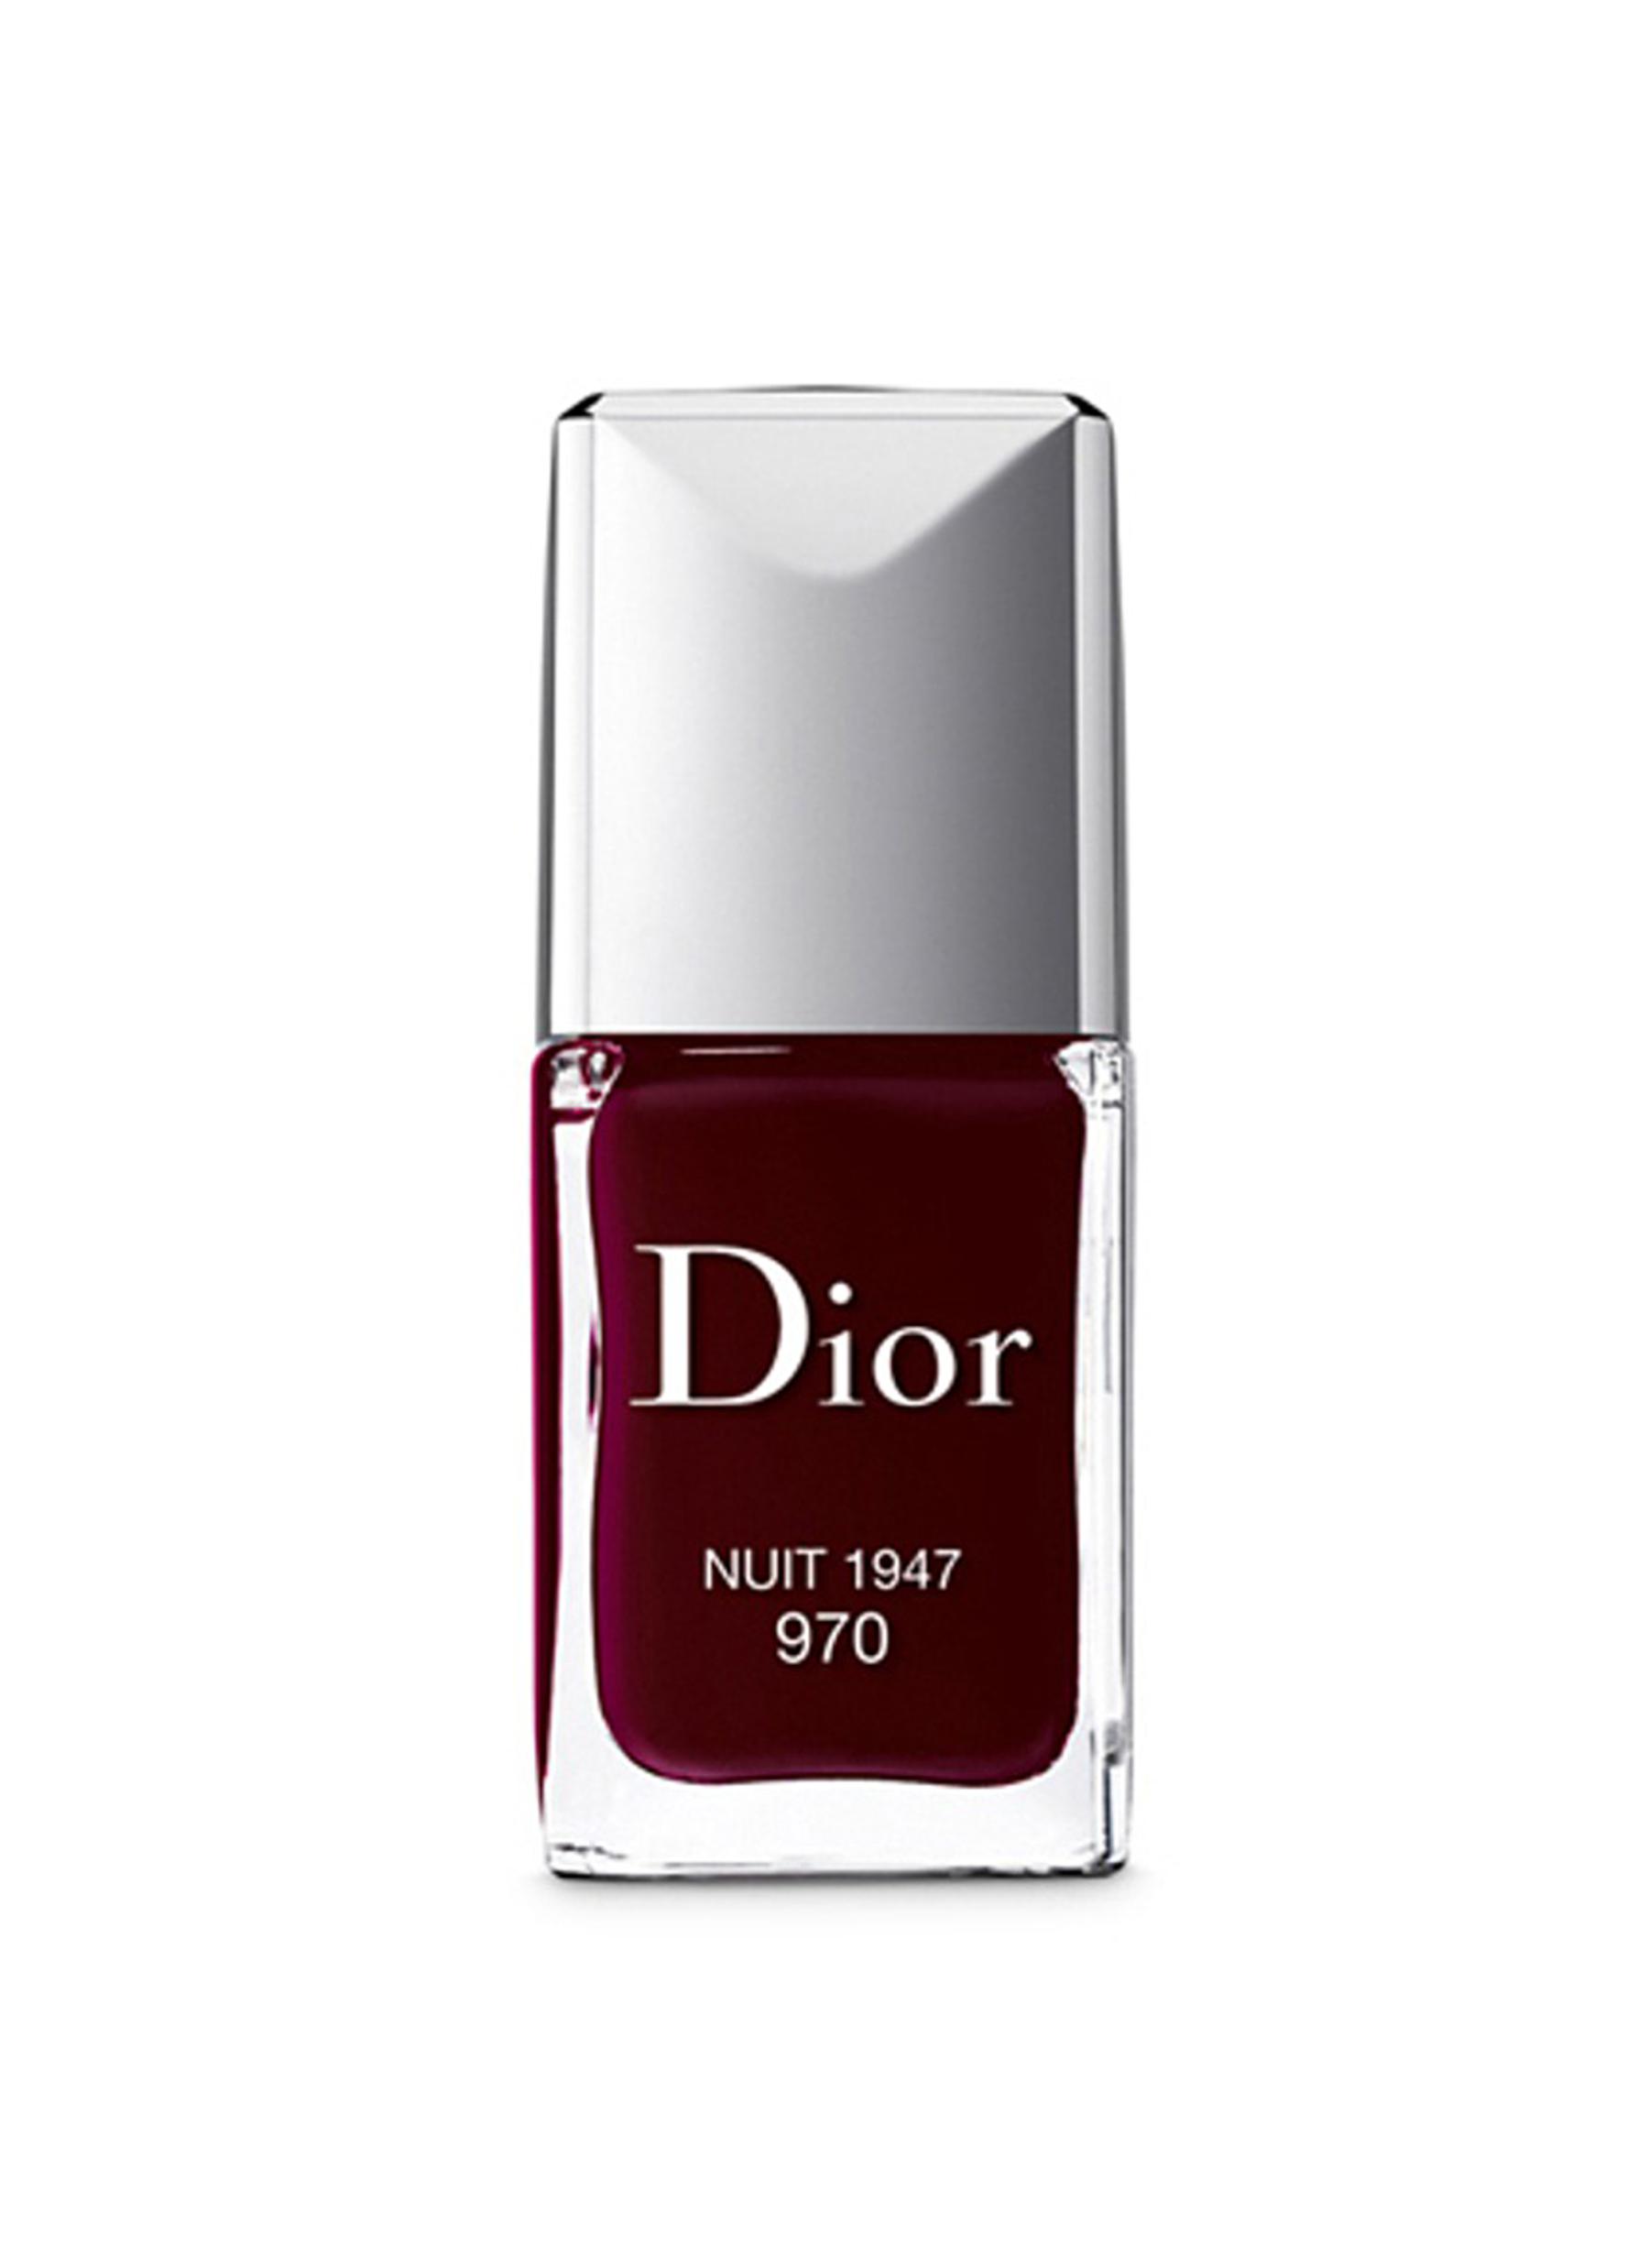 MakeUp Picnic: Dior Manicure Essentials